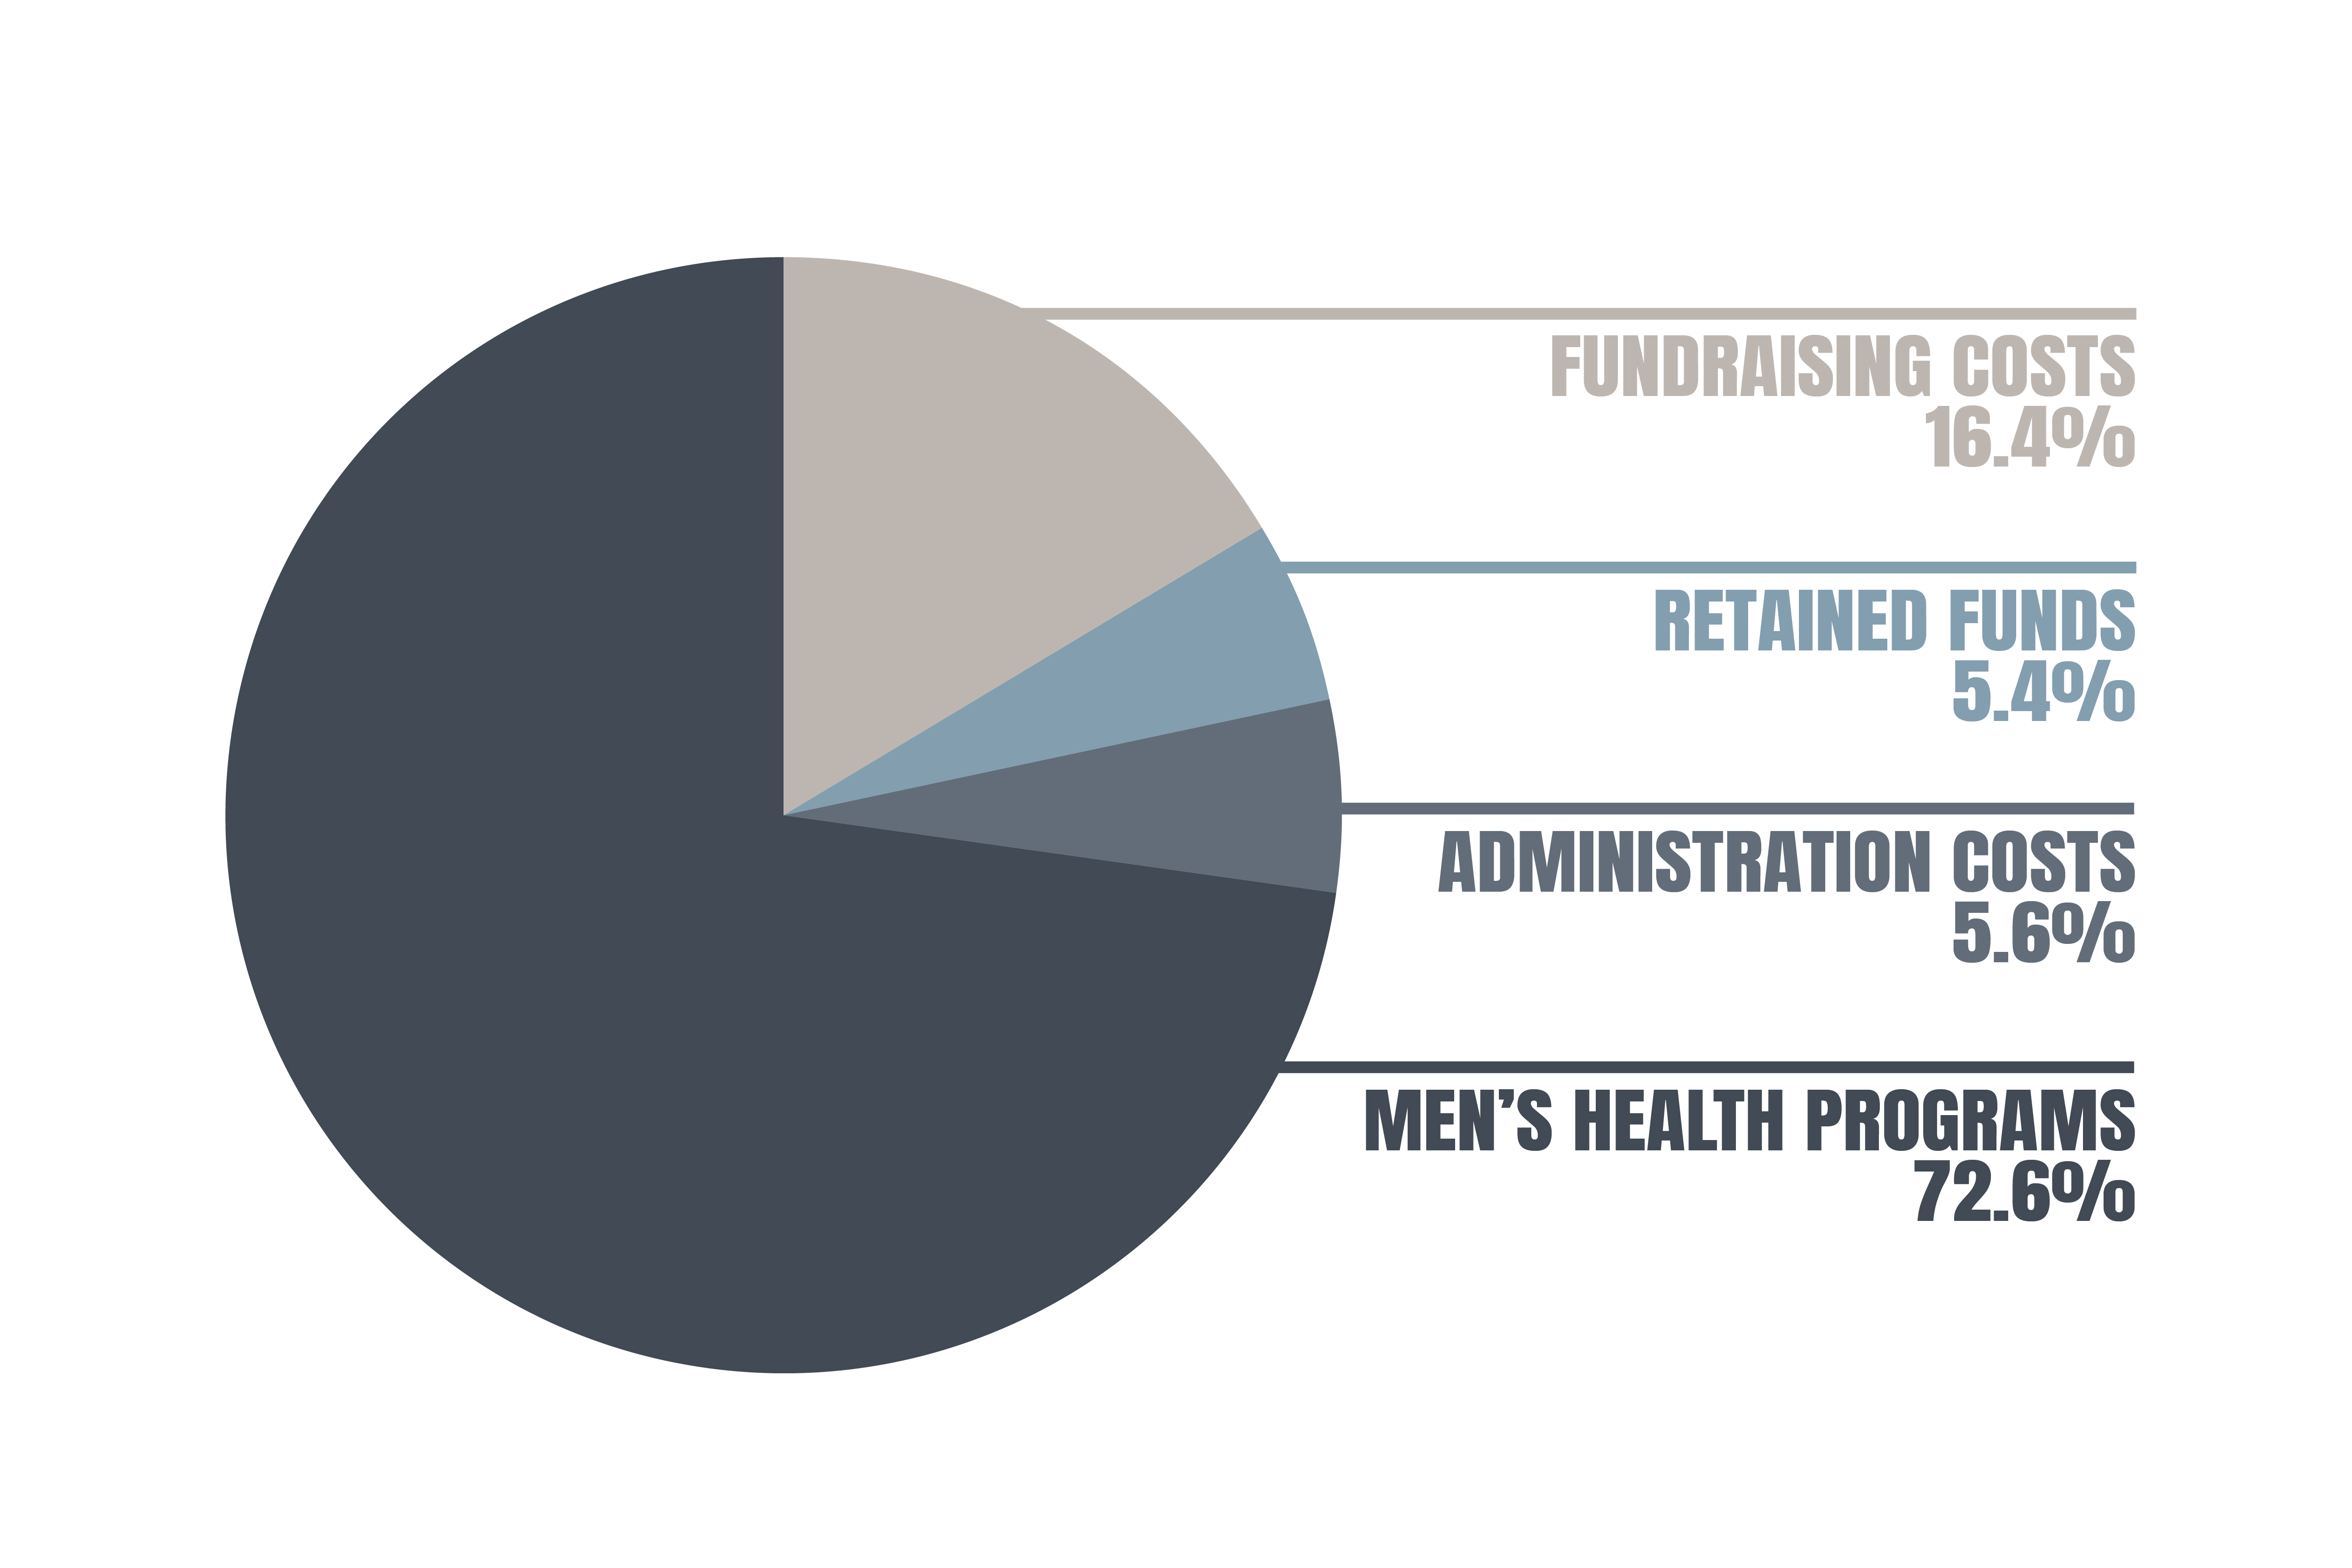 Charity Money Distribution Chart